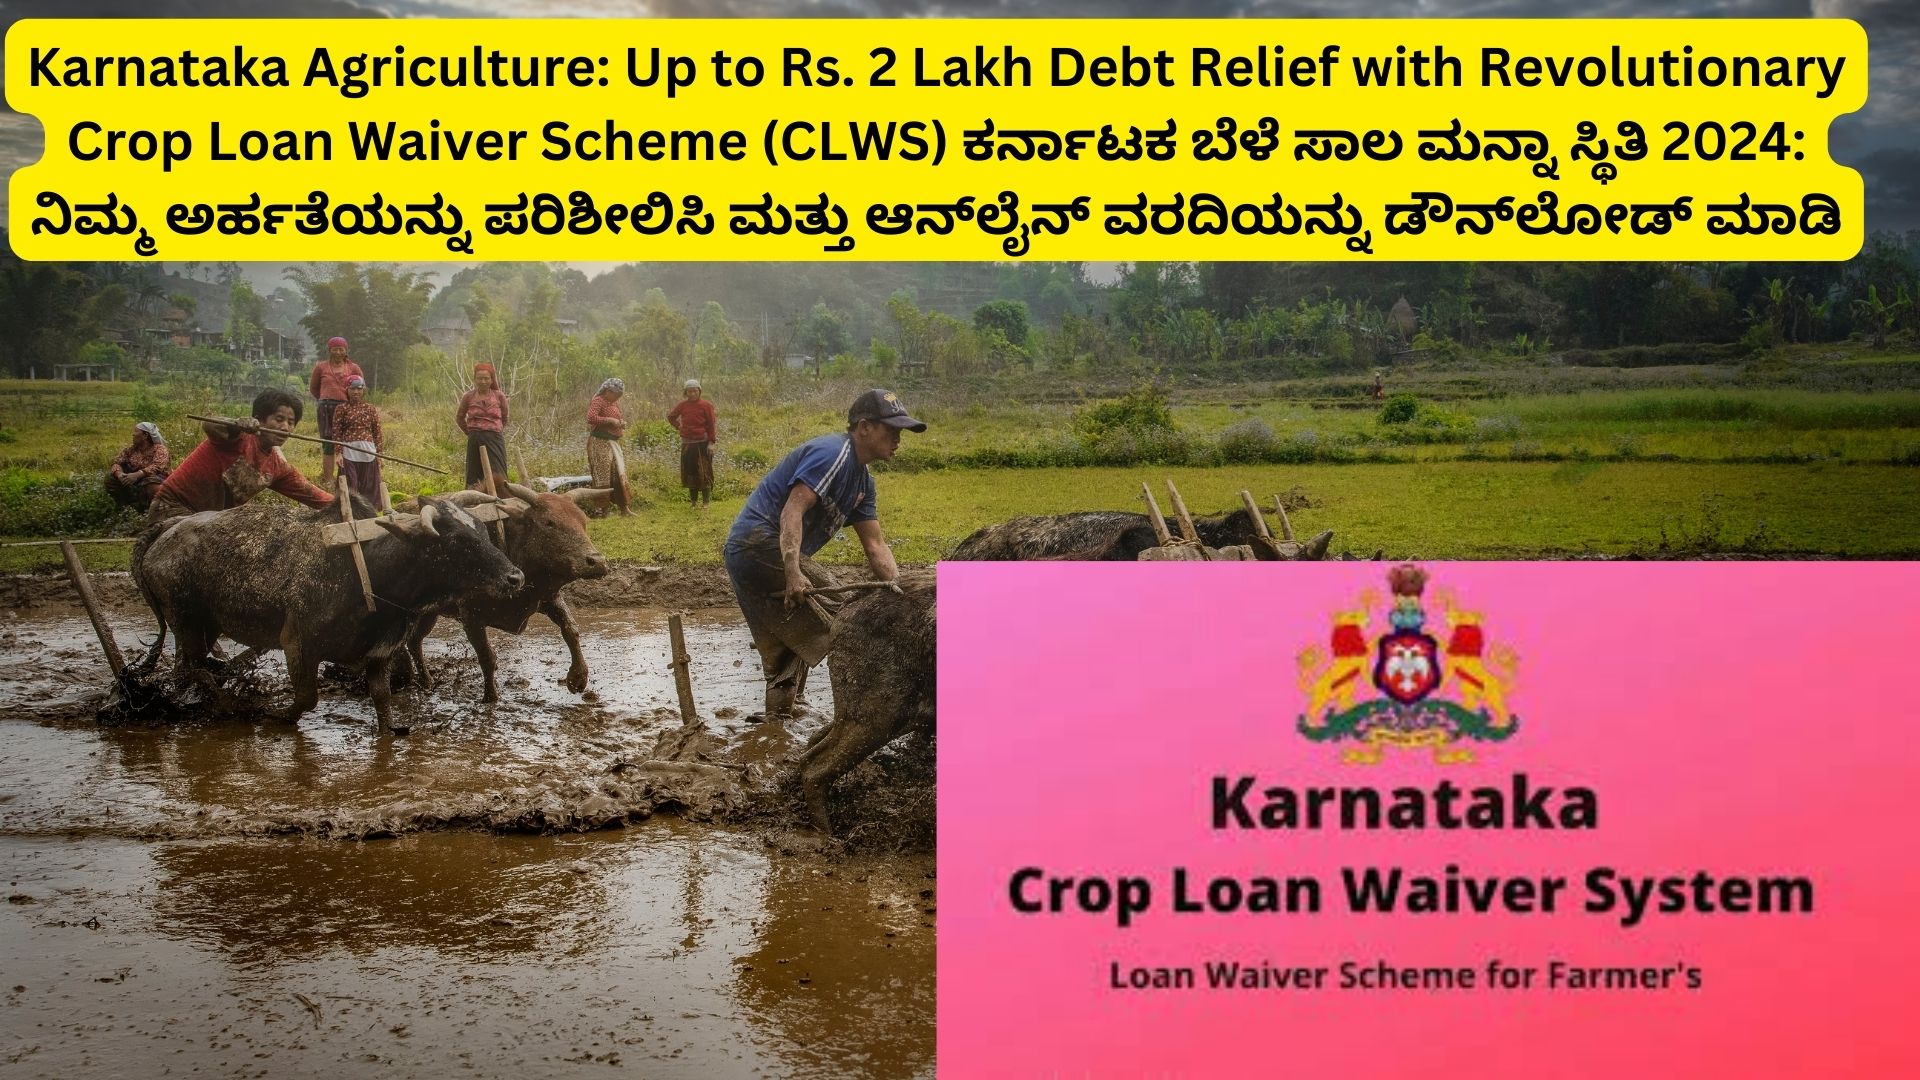 Karnataka Agriculture: Up to Rs. 2 Lakh Debt Relief with Revolutionary Crop Loan Waiver Scheme (CLWS) ಕರ್ನಾಟಕ ಬೆಳೆ ಸಾಲ ಮನ್ನಾ ಸ್ಥಿತಿ 2024: ನಿಮ್ಮ ಅರ್ಹತೆಯನ್ನು ಪರಿಶೀಲಿಸಿ ಮತ್ತು ಆನ್‌ಲೈನ್ ವರದಿಯನ್ನು ಡೌನ್‌ಲೋಡ್ ಮಾಡಿ